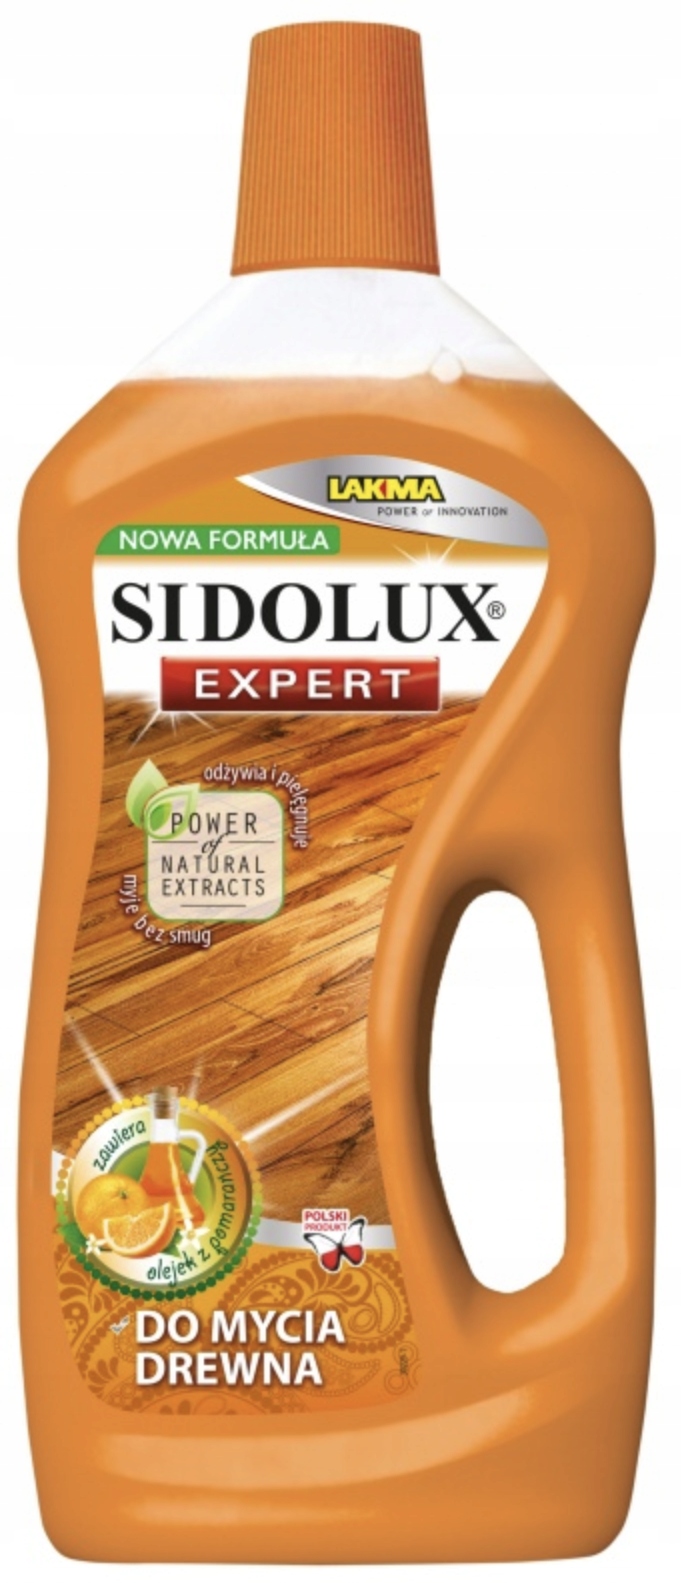 Sidolux для полов. Sidolux для дерева. Средство для мытья для ламината и деревянных поверхностей Sidolux Expert.